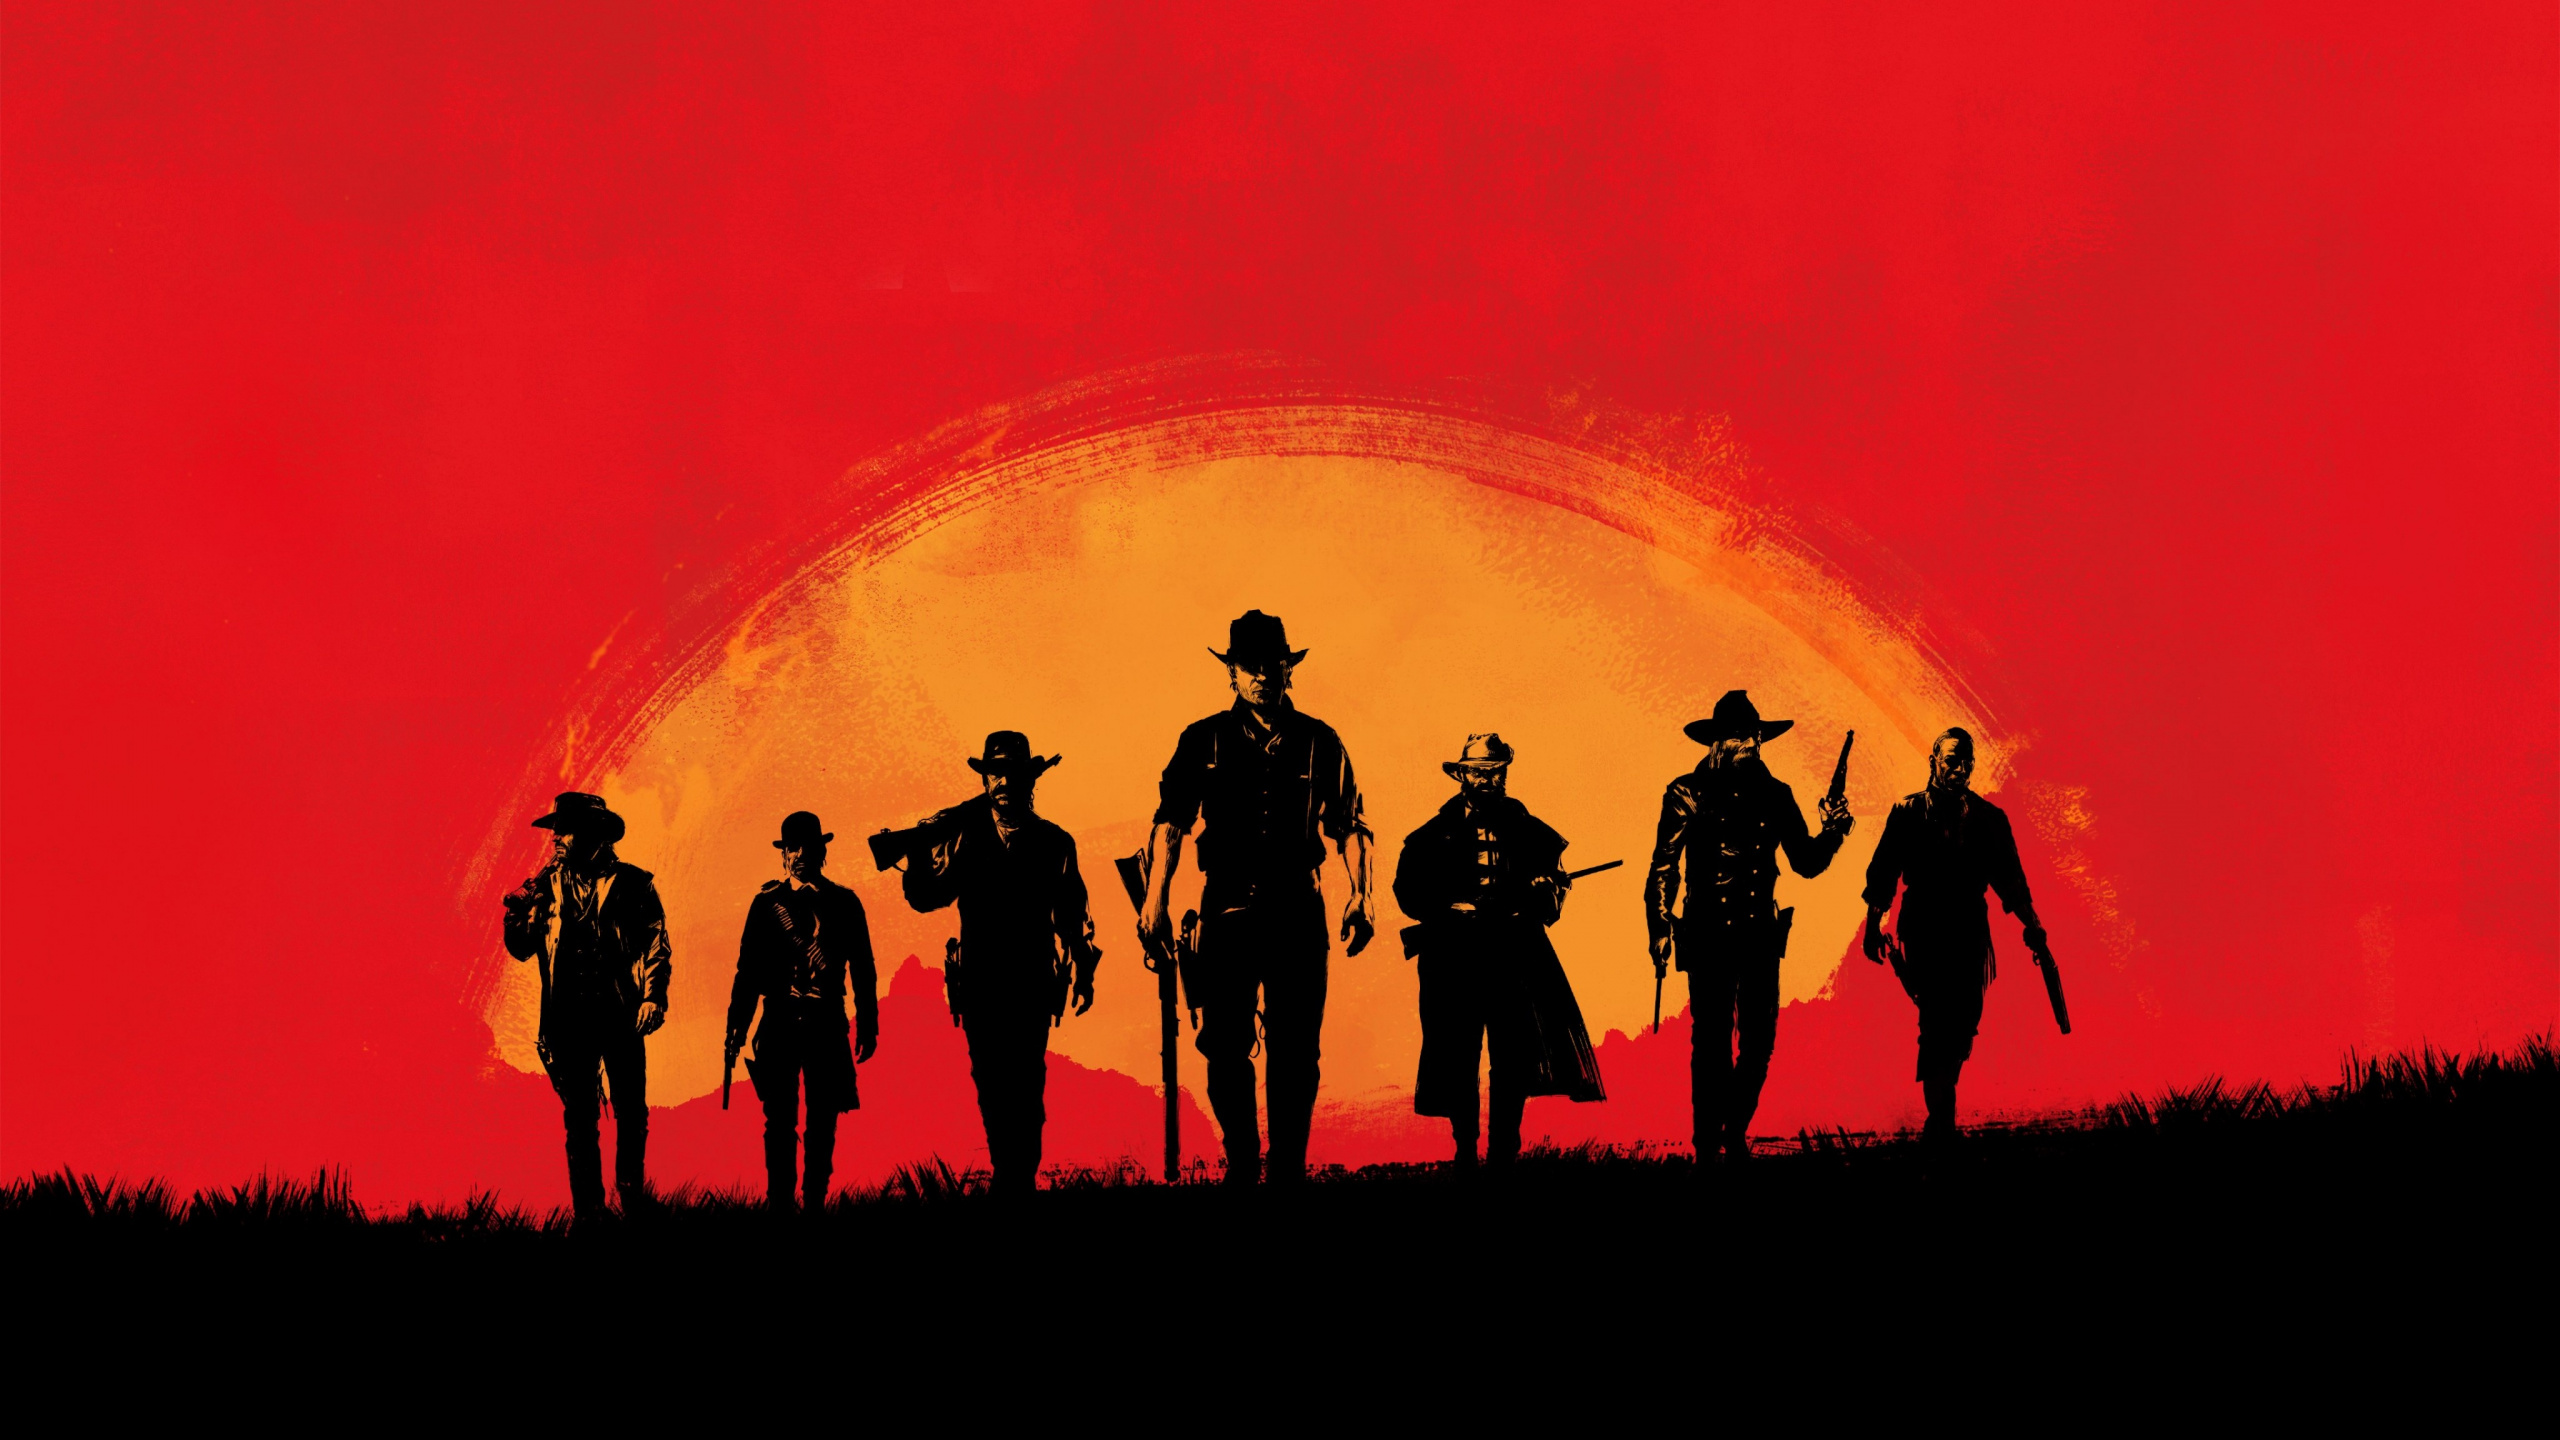 Red Dead Redemption 2, Red Dead Redemption, Rockstar Games, Silhouette, Illustration. Wallpaper in 2560x1440 Resolution